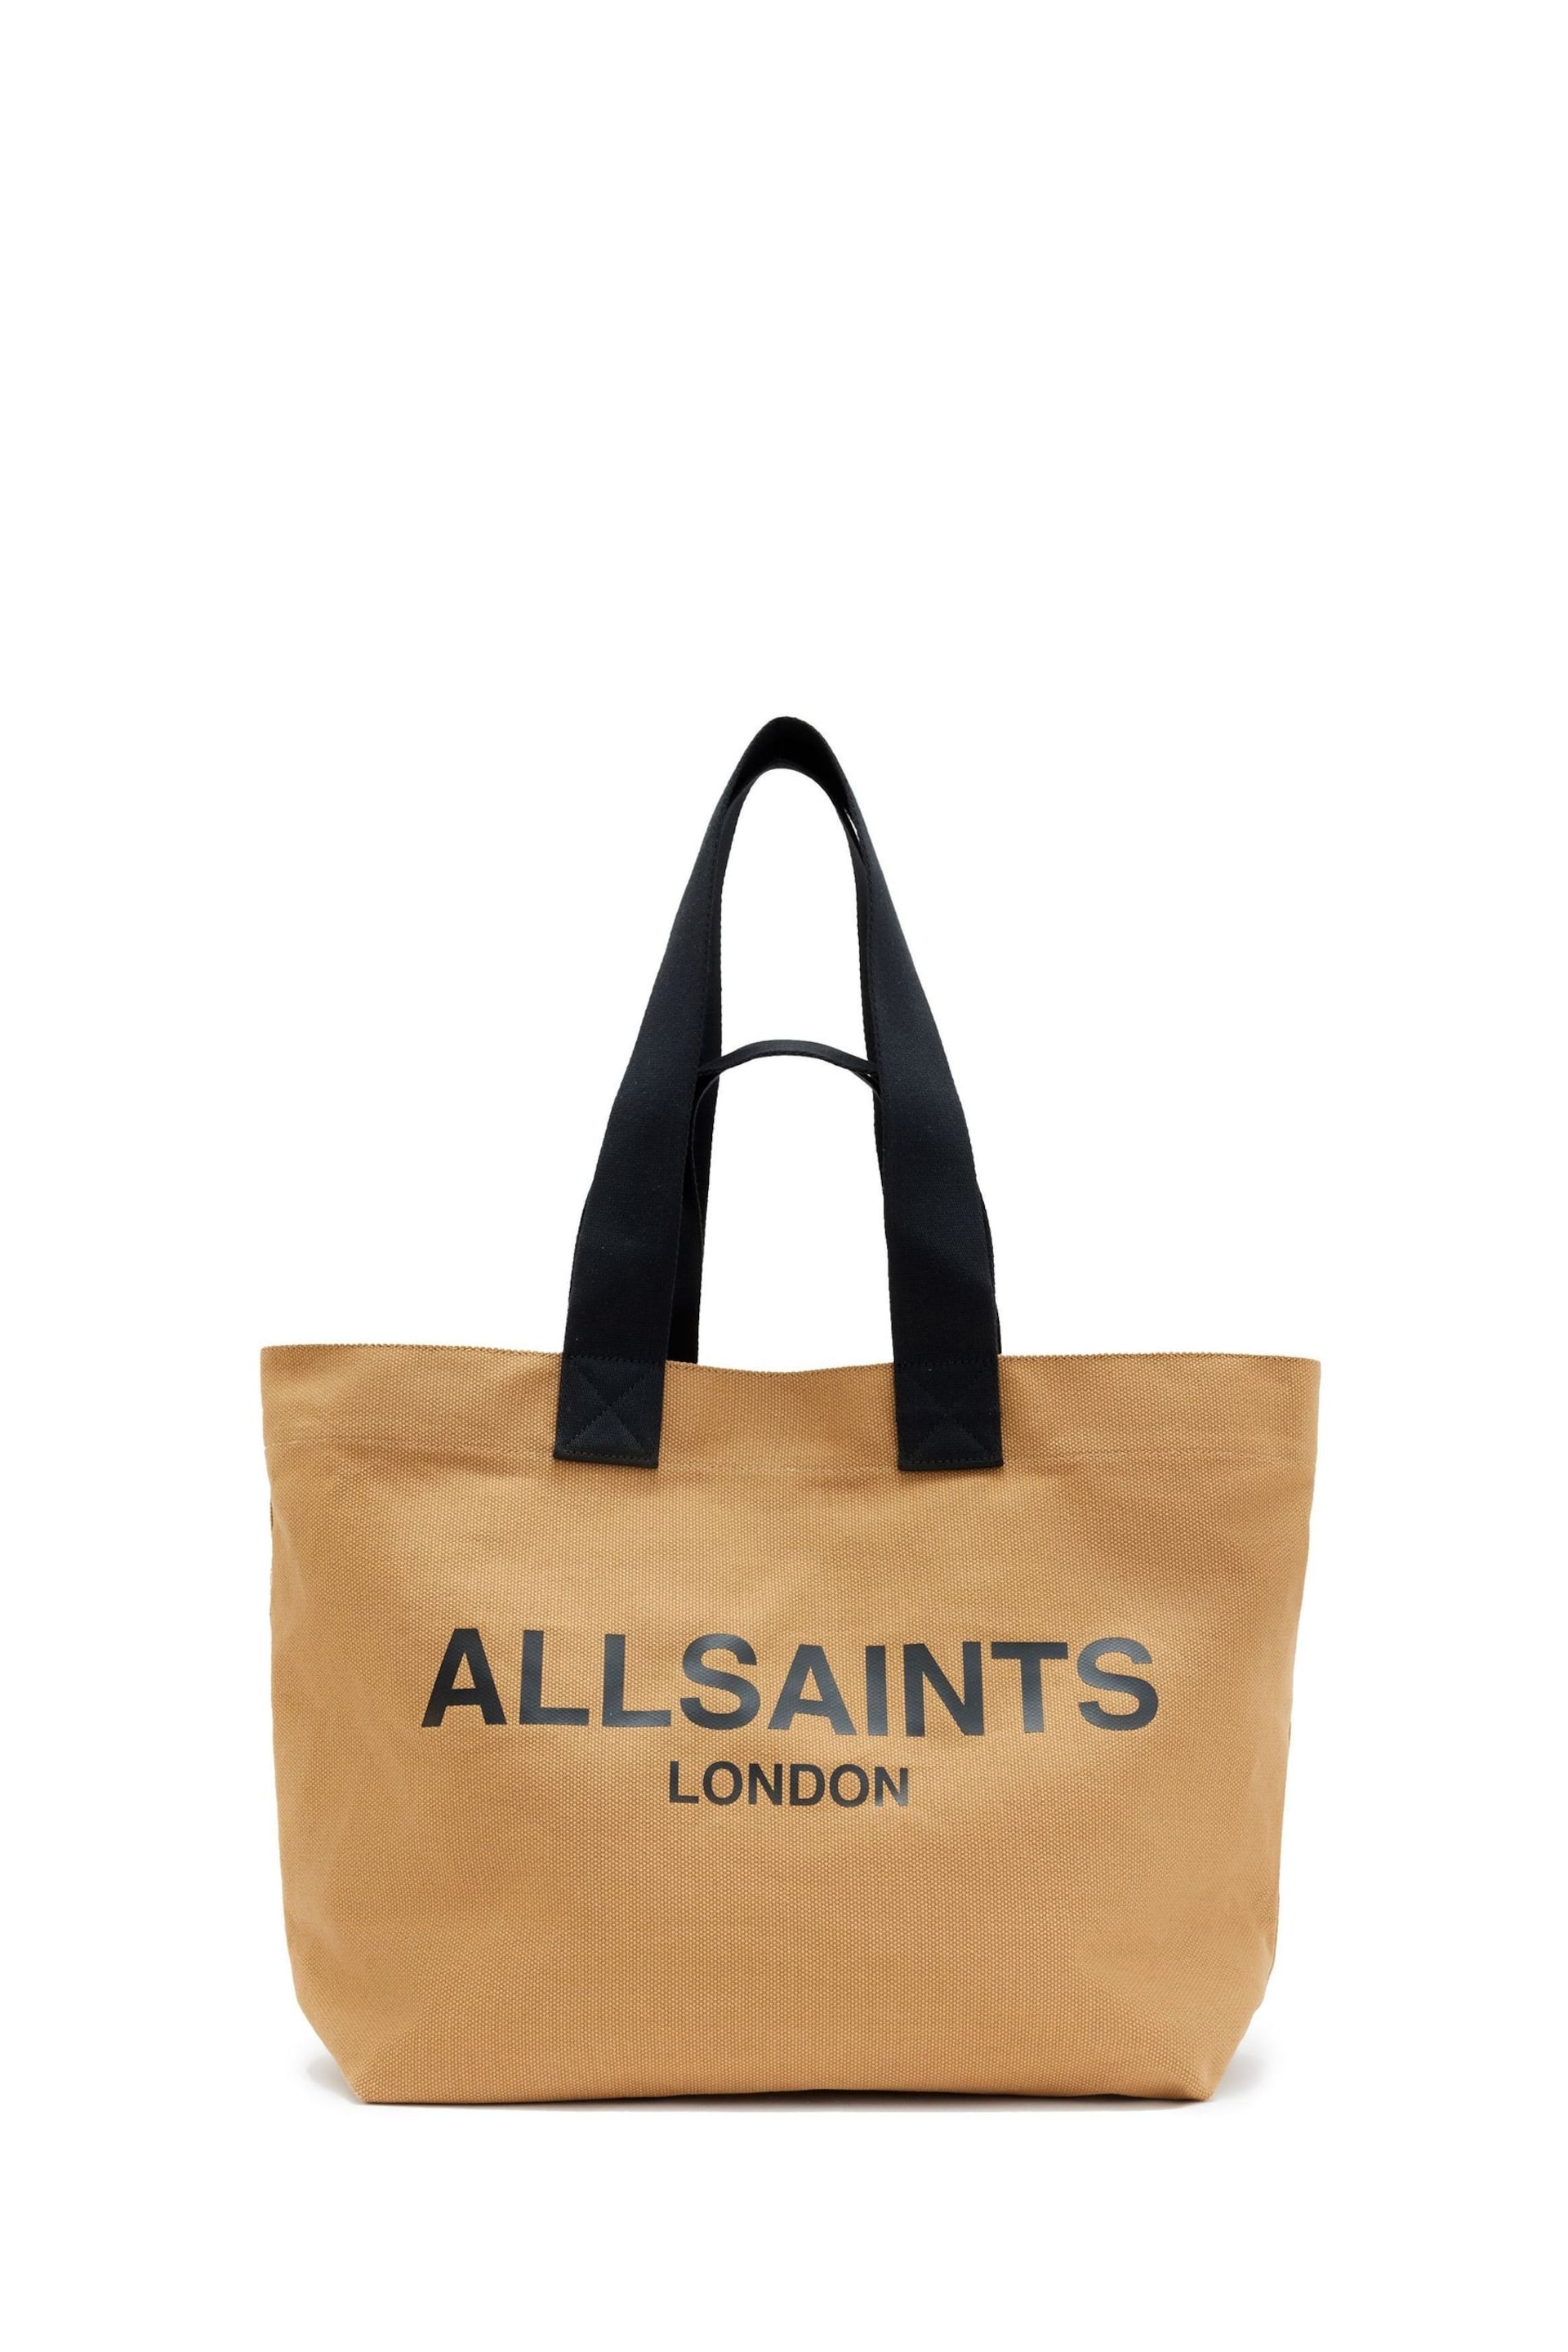 AllSaints Black Ali Canvas Tote Bag - Image 3 of 5